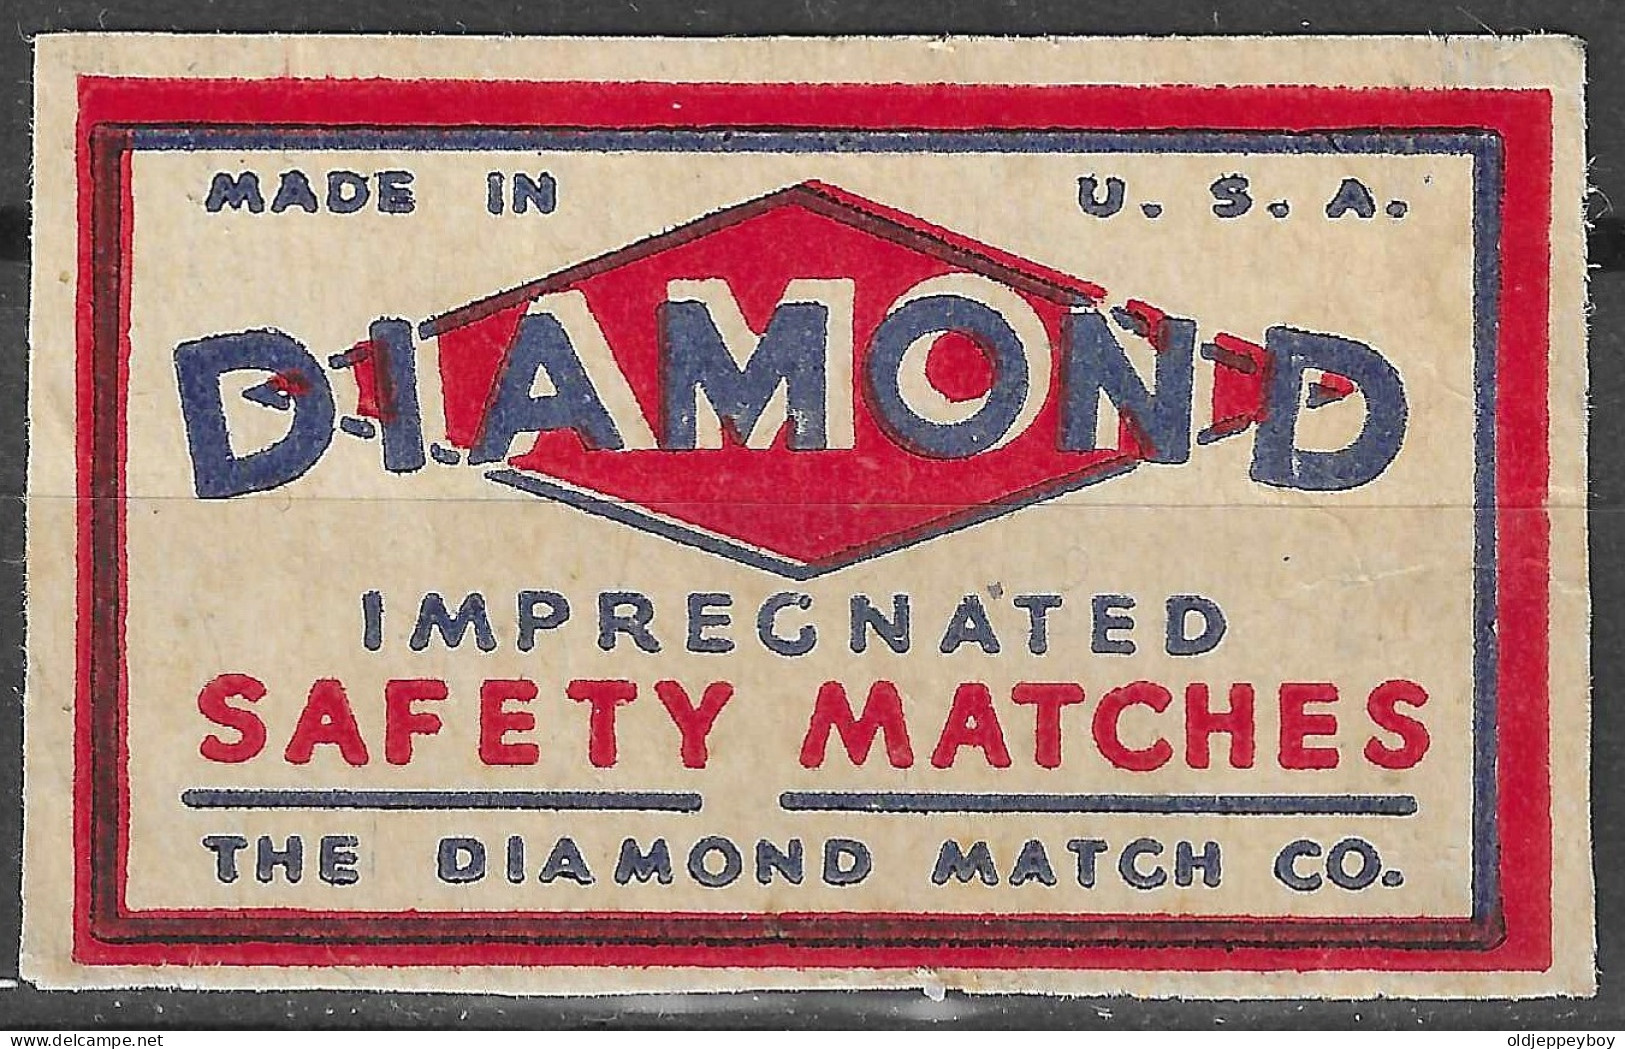  MADE IN U.S.A  Phillumeny MATCHBOX LABEL DIAMOND  DIAMOND MATCH CO.  3.5 X 5 CM - Boites D'allumettes - Etiquettes